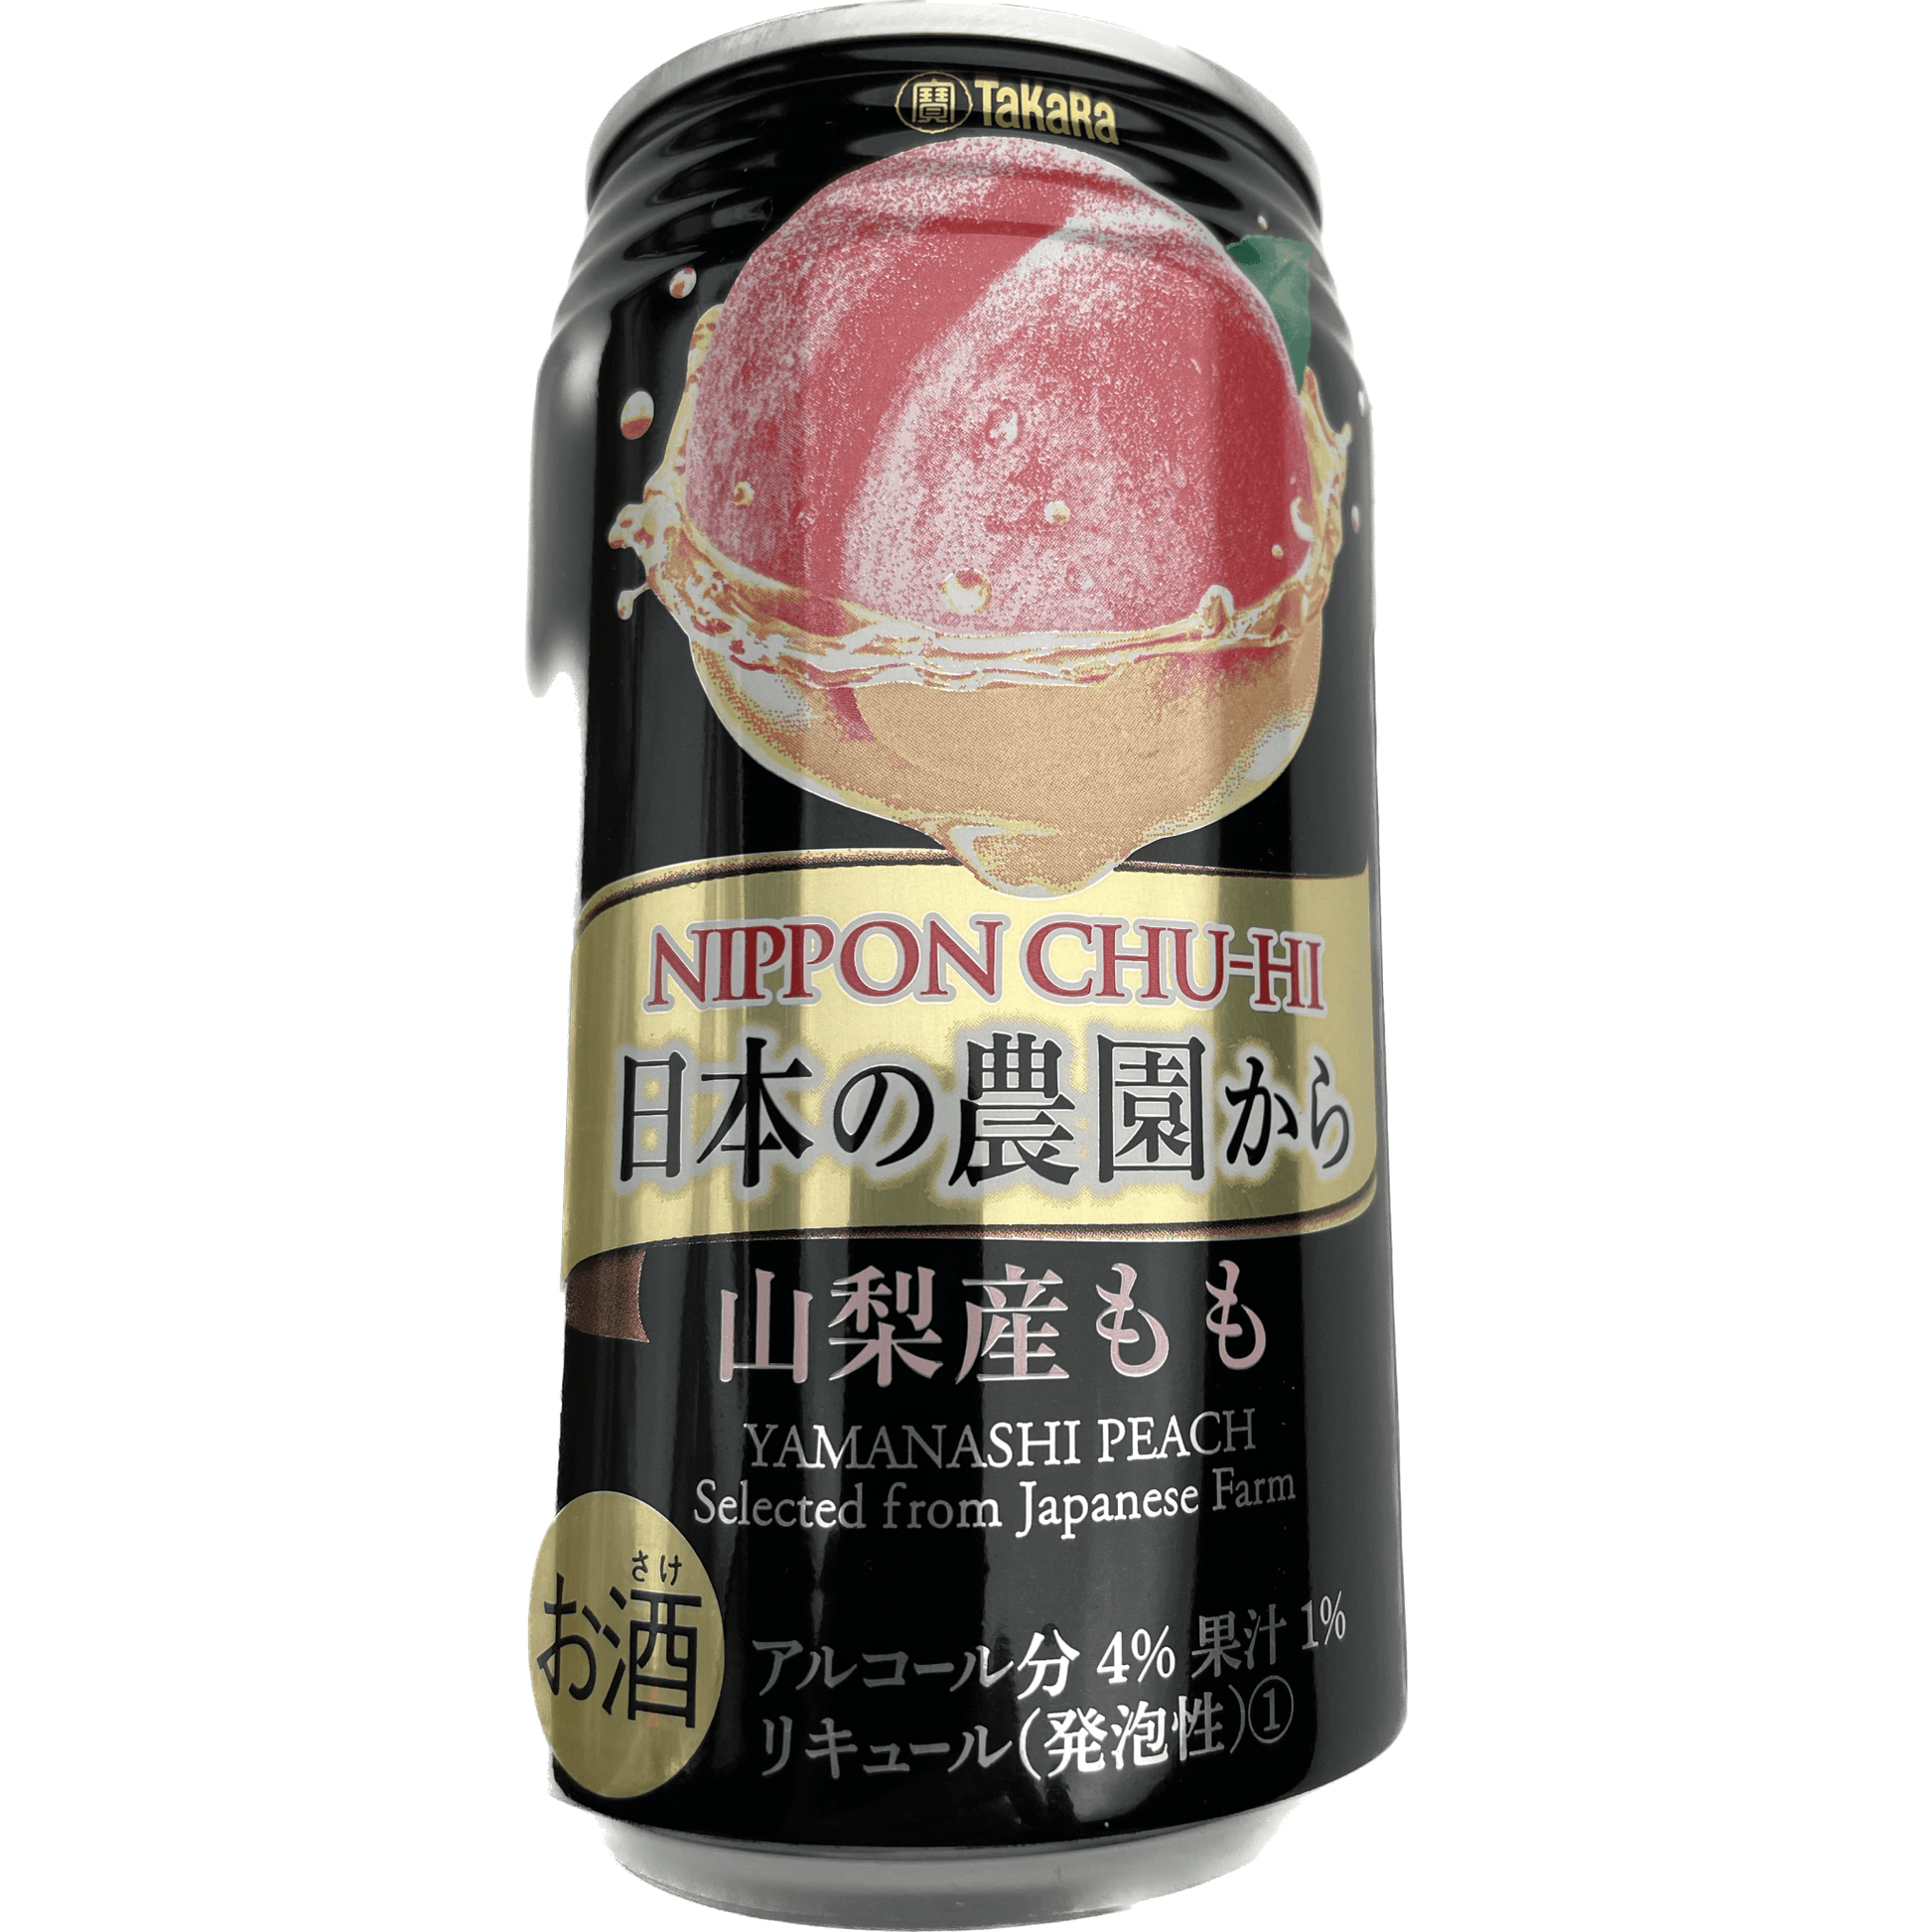 Takara canned chuhai peach from Yamanashi farm in Japan タカラ　缶チューハイ　日本の農園から山梨産もも　350ml - RiceWineShop